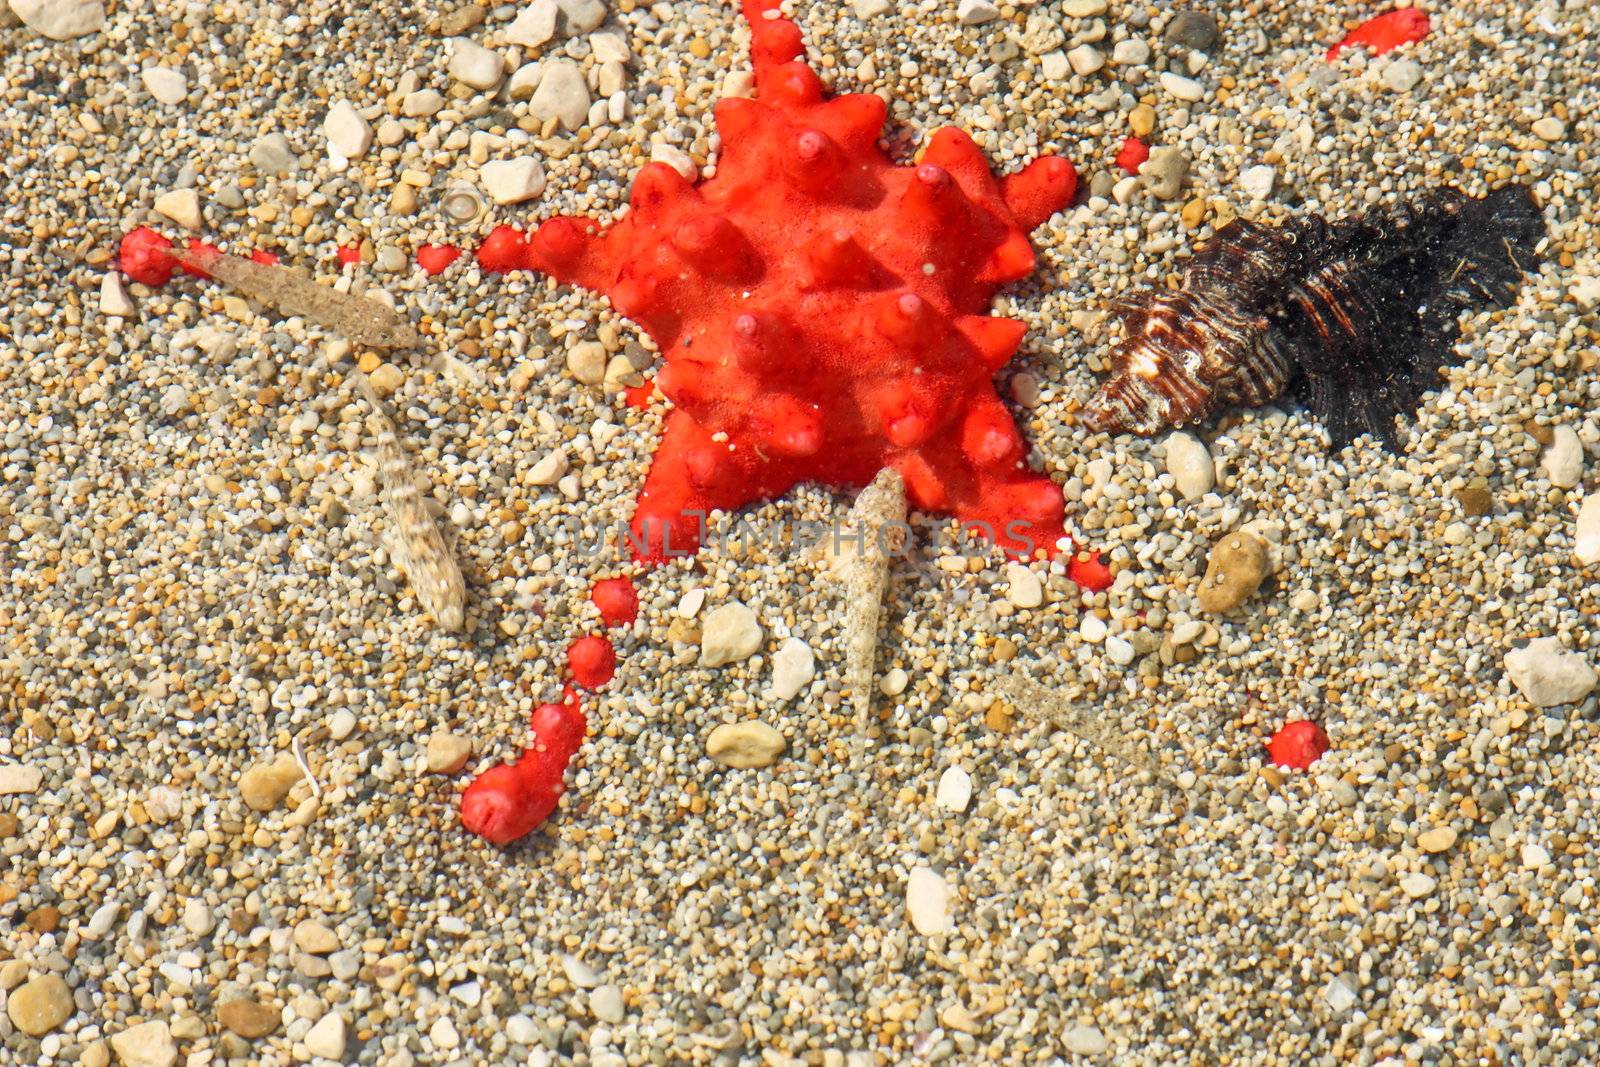 Red starfish by Boris15